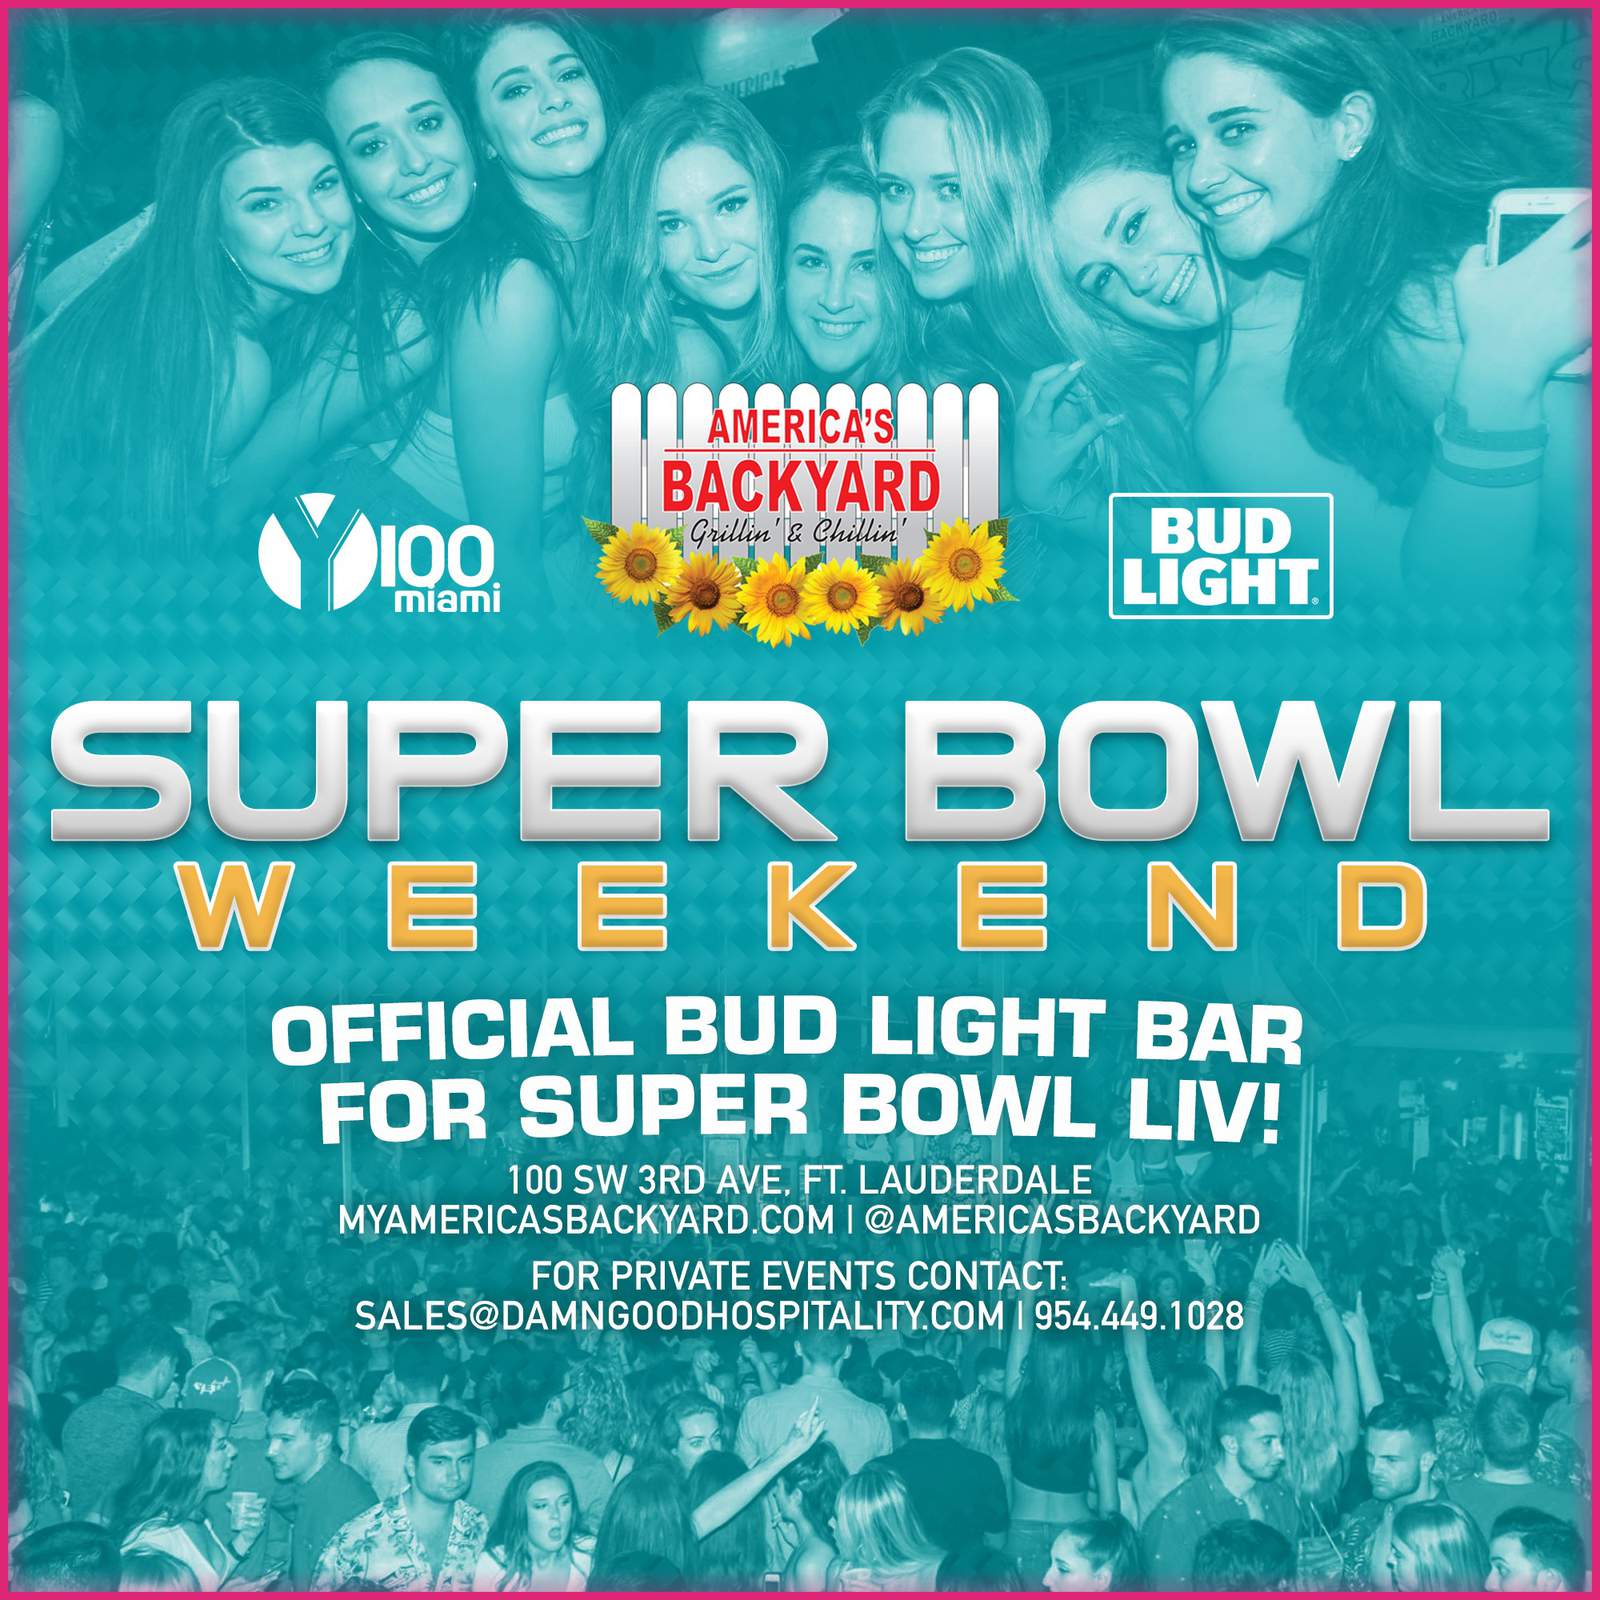 America’s Backyard is Official Bud Light Bar for Super Bowl LIV